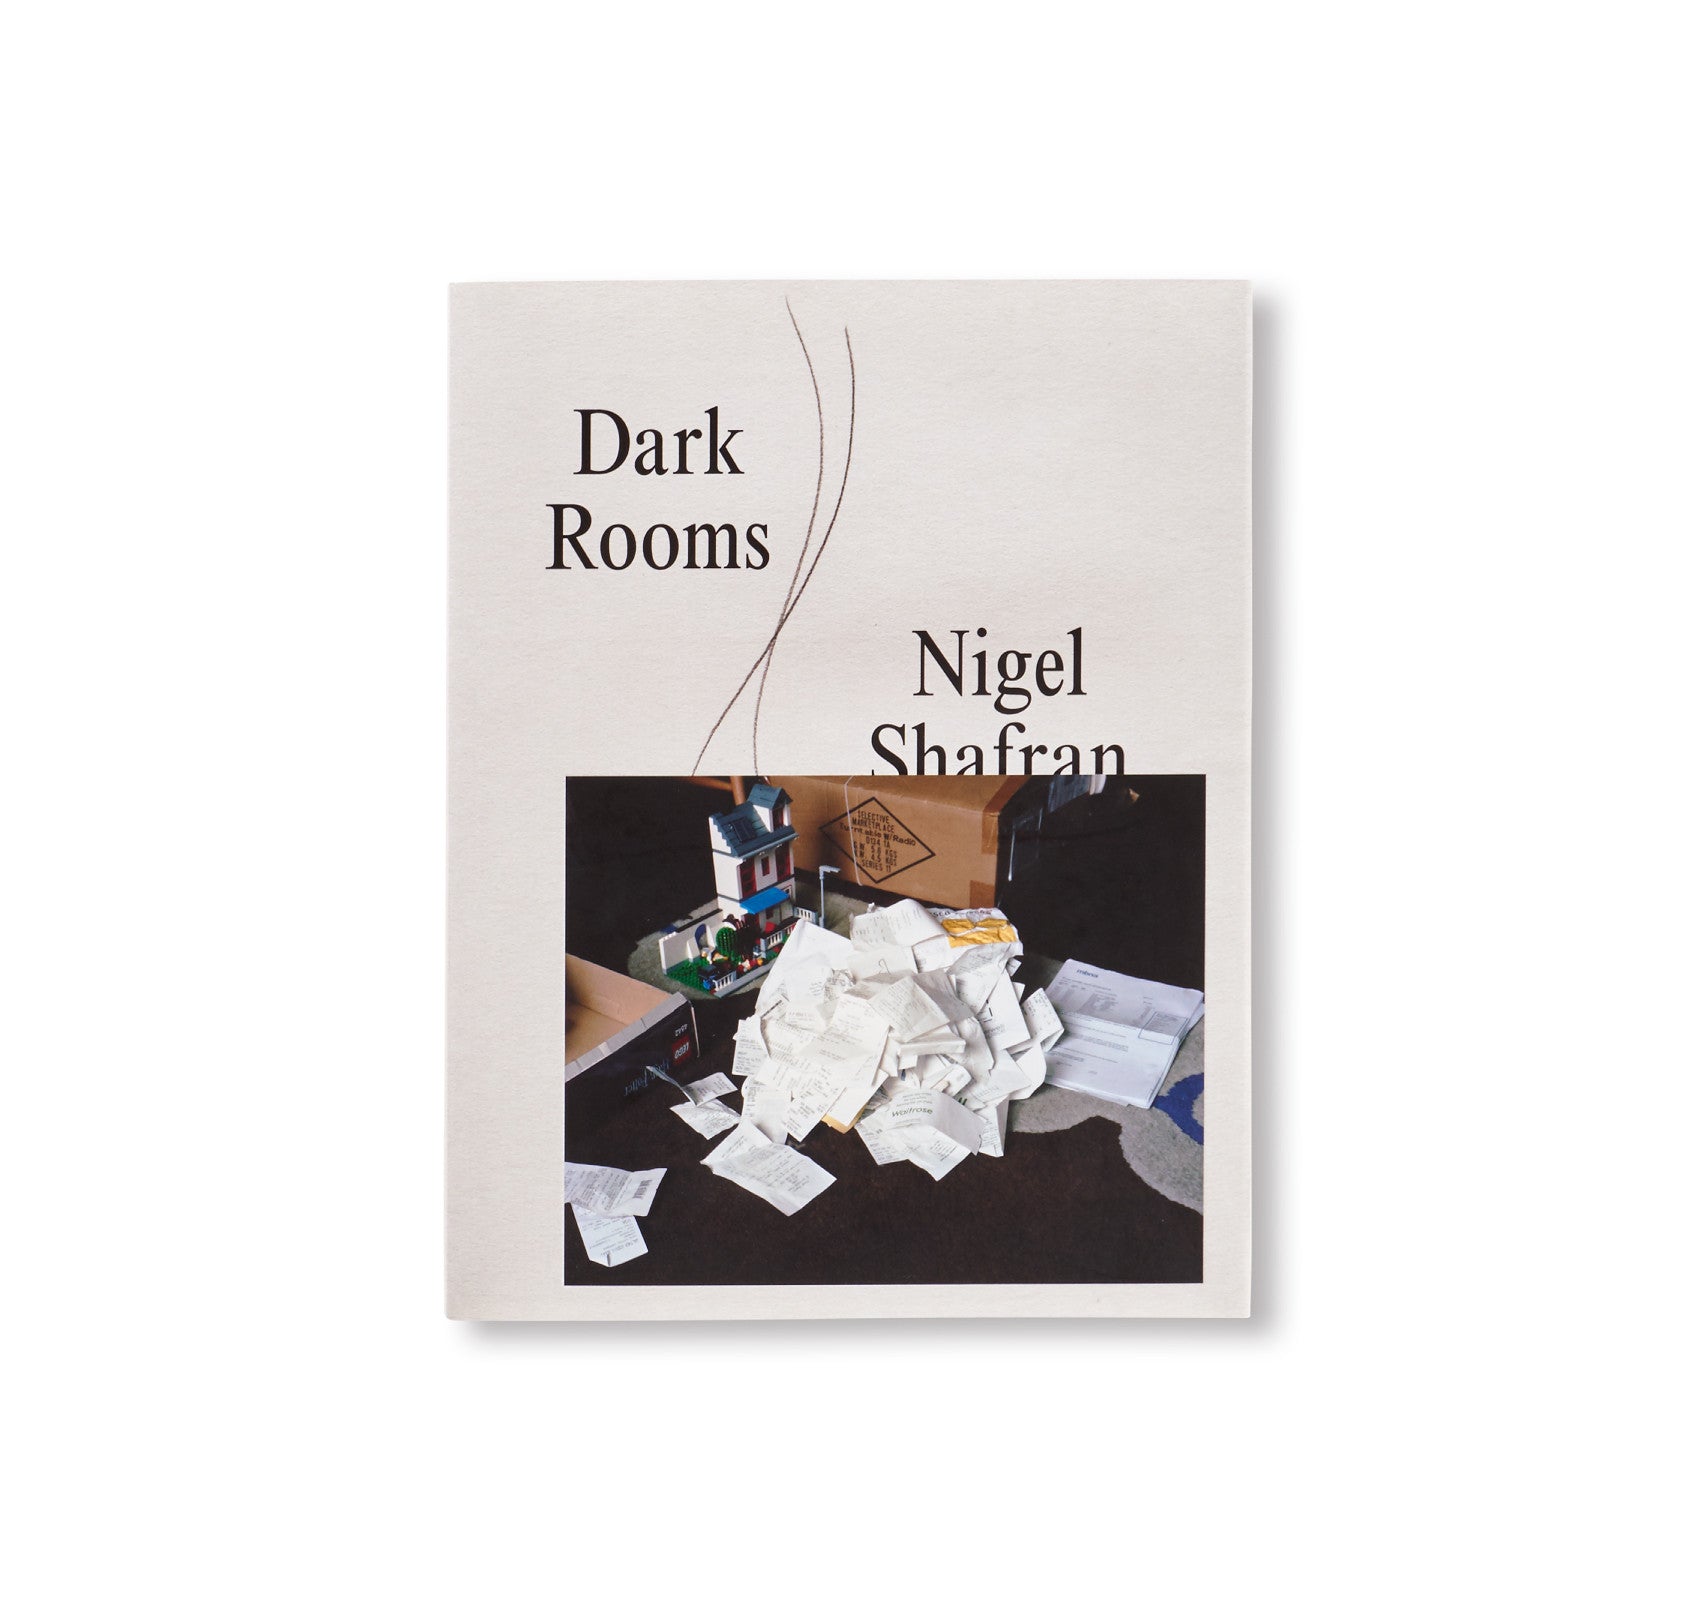 DARK ROOMS by Nigel Shafran [SIGNED]